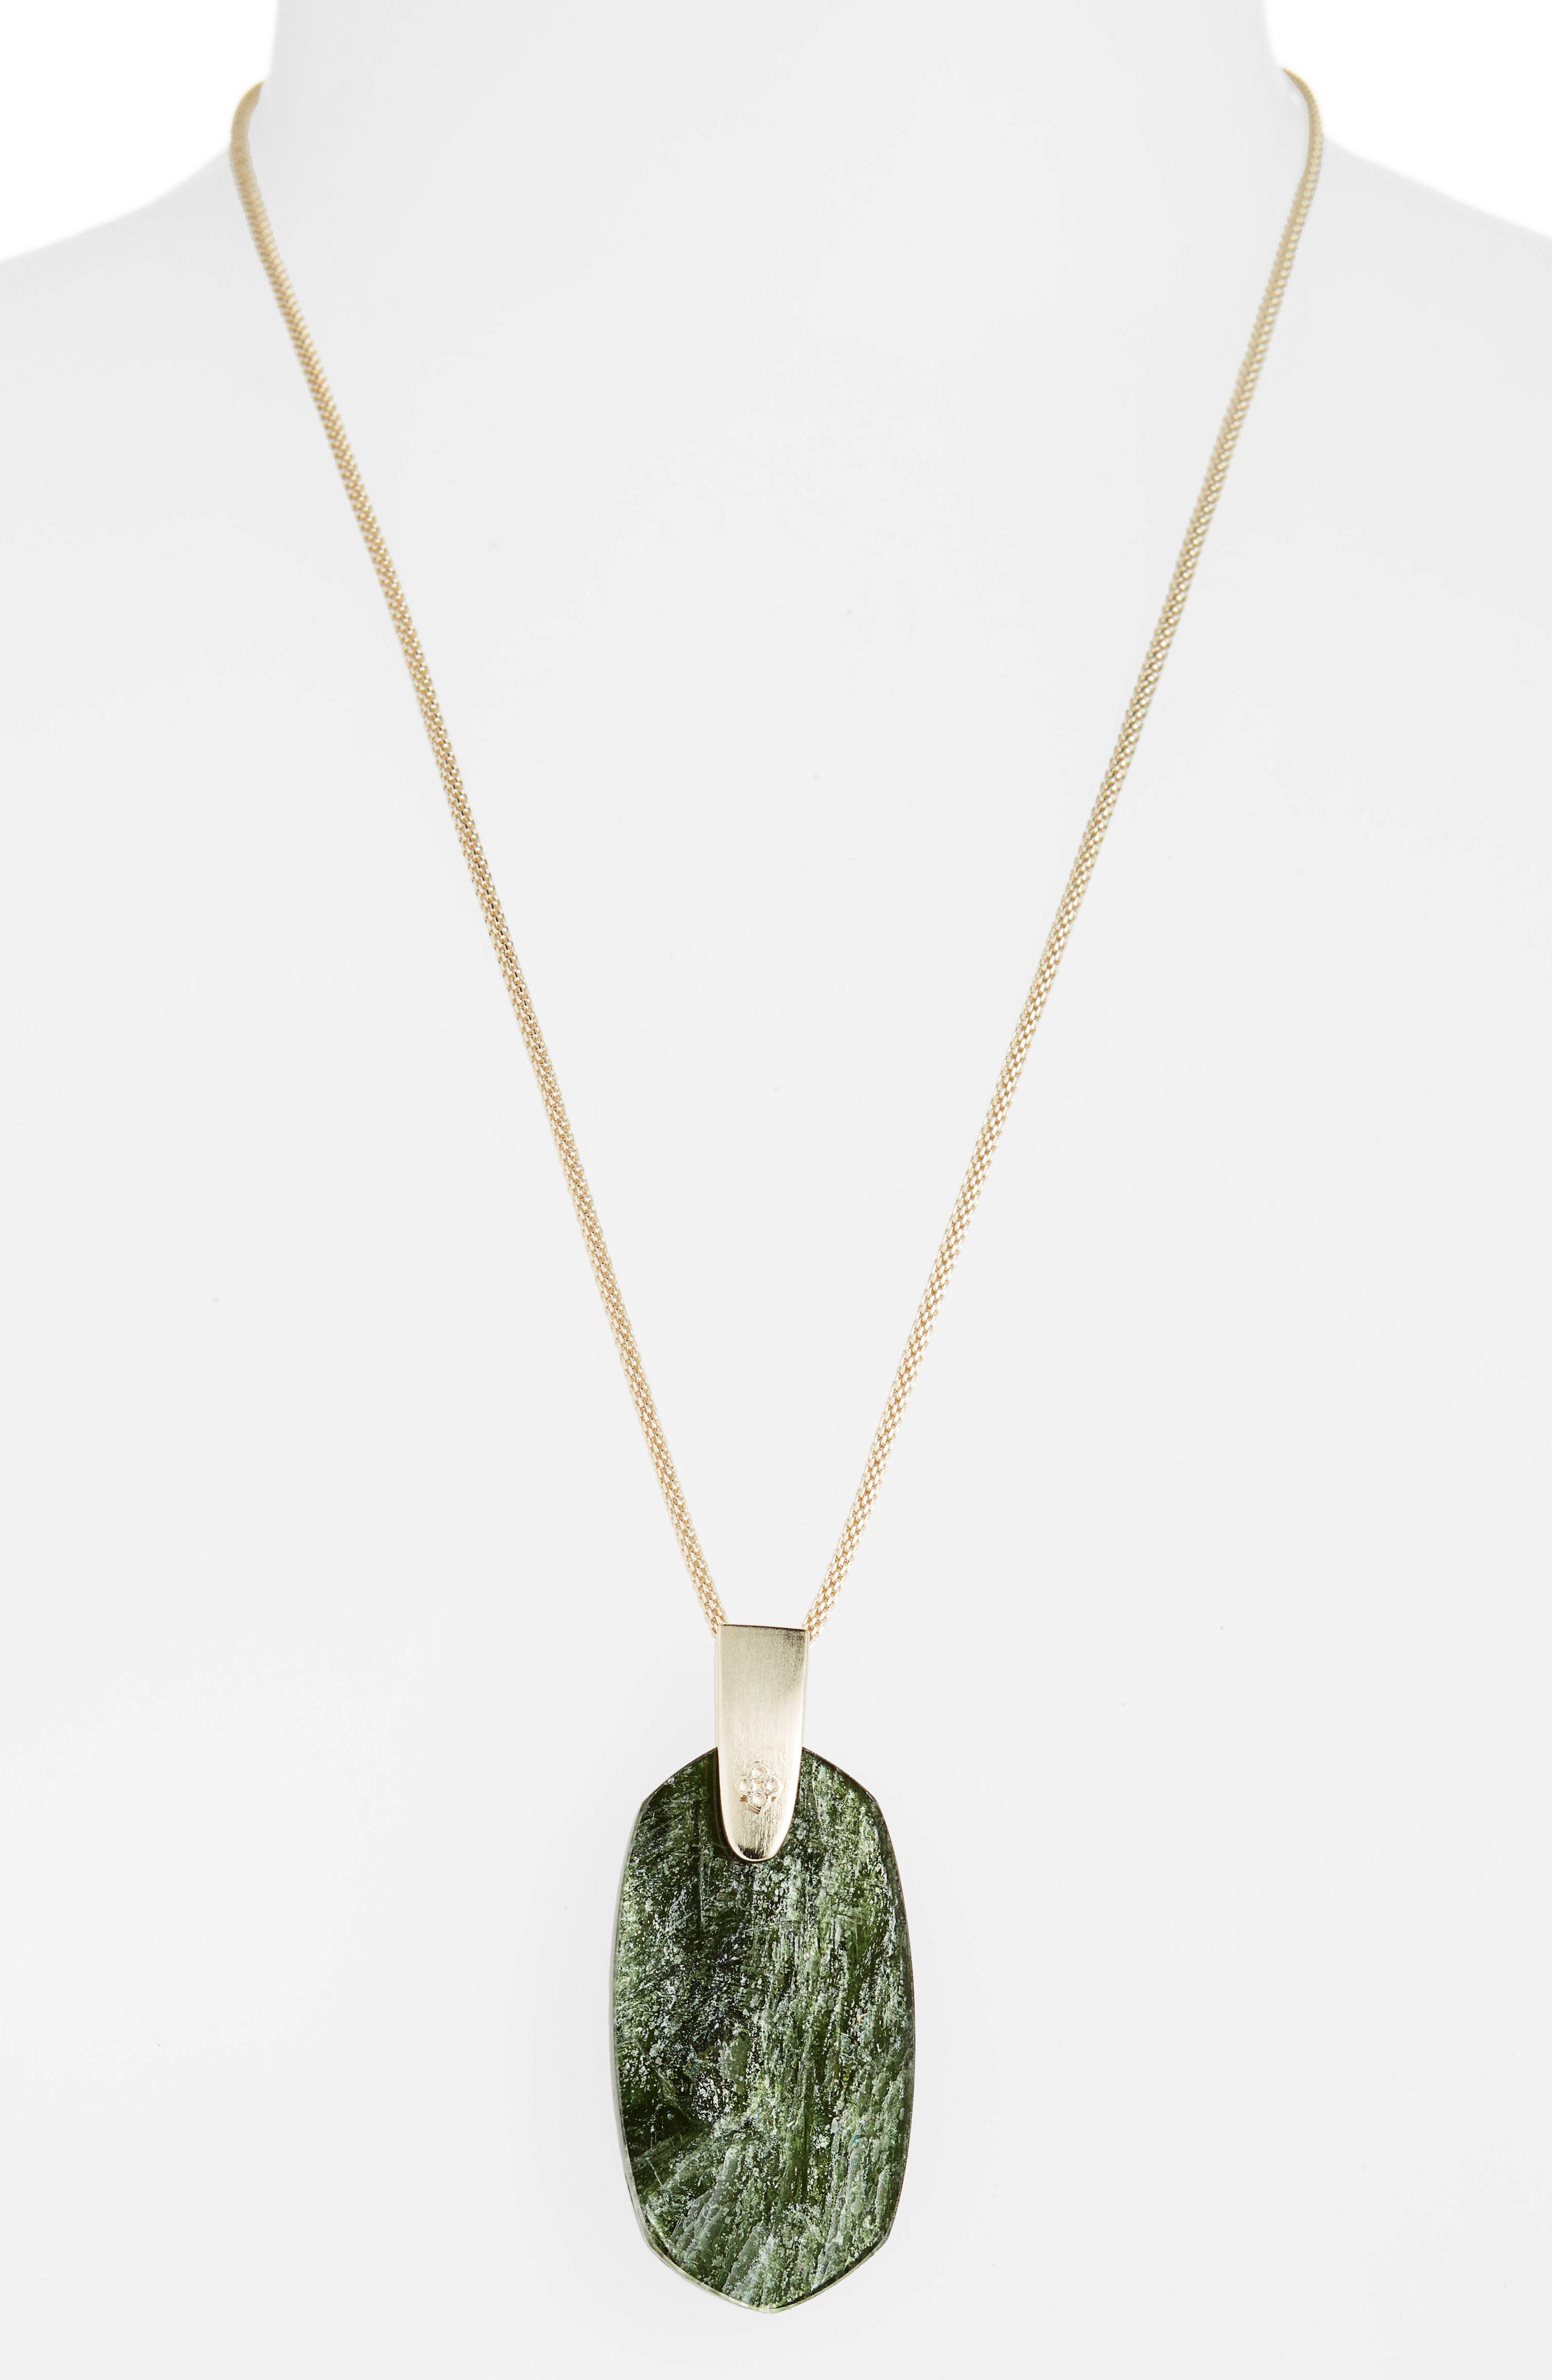 Lyst - Kendra Scott Inez Pendant Necklace in Metallic